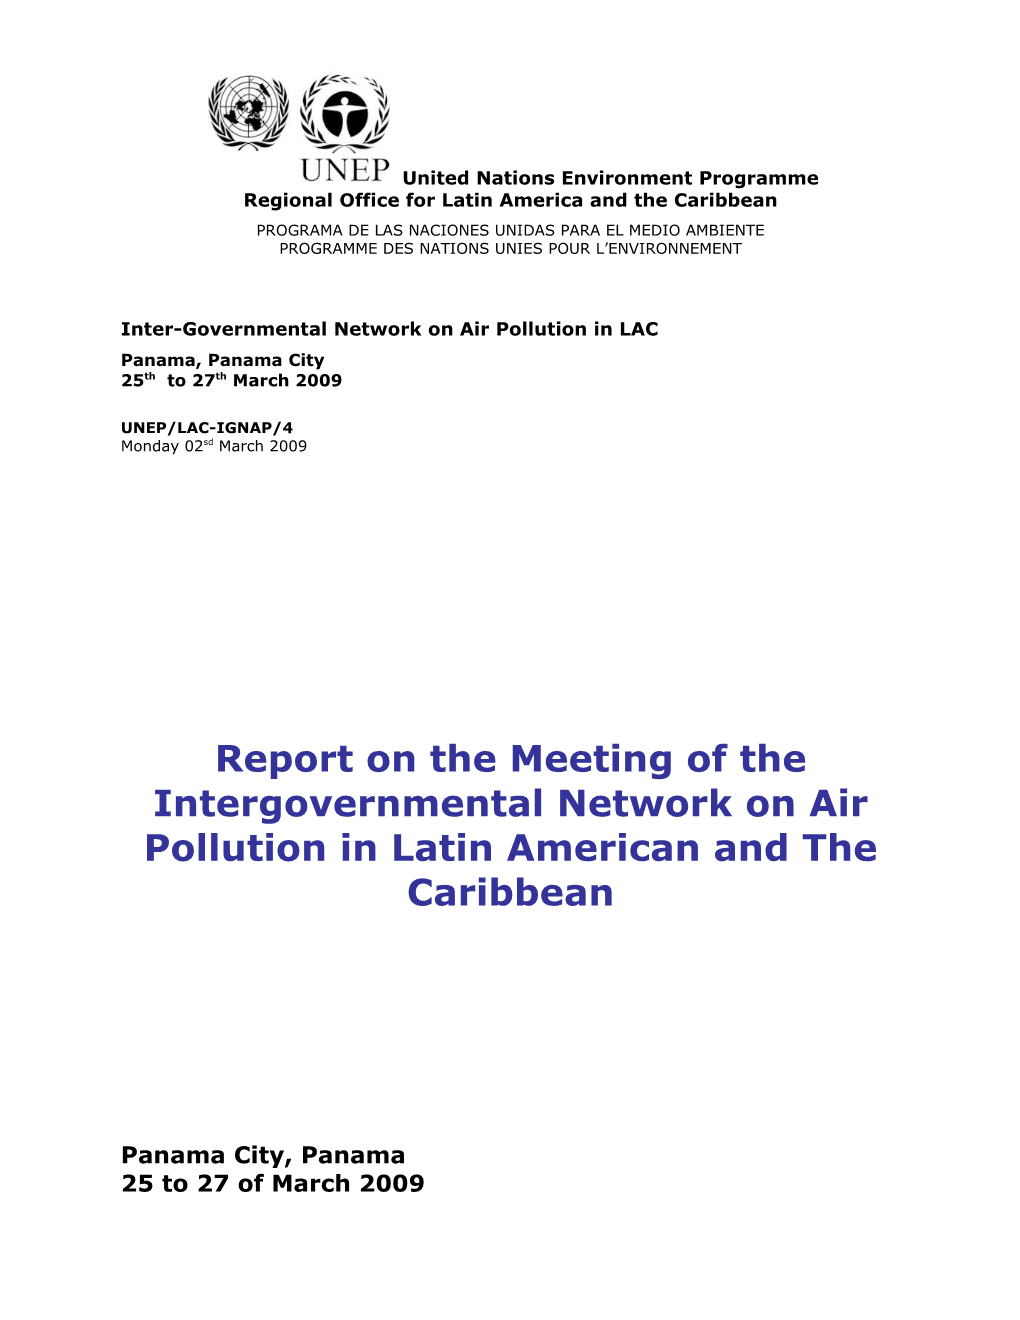 Report Interg Meeting Atmospheric Pollution